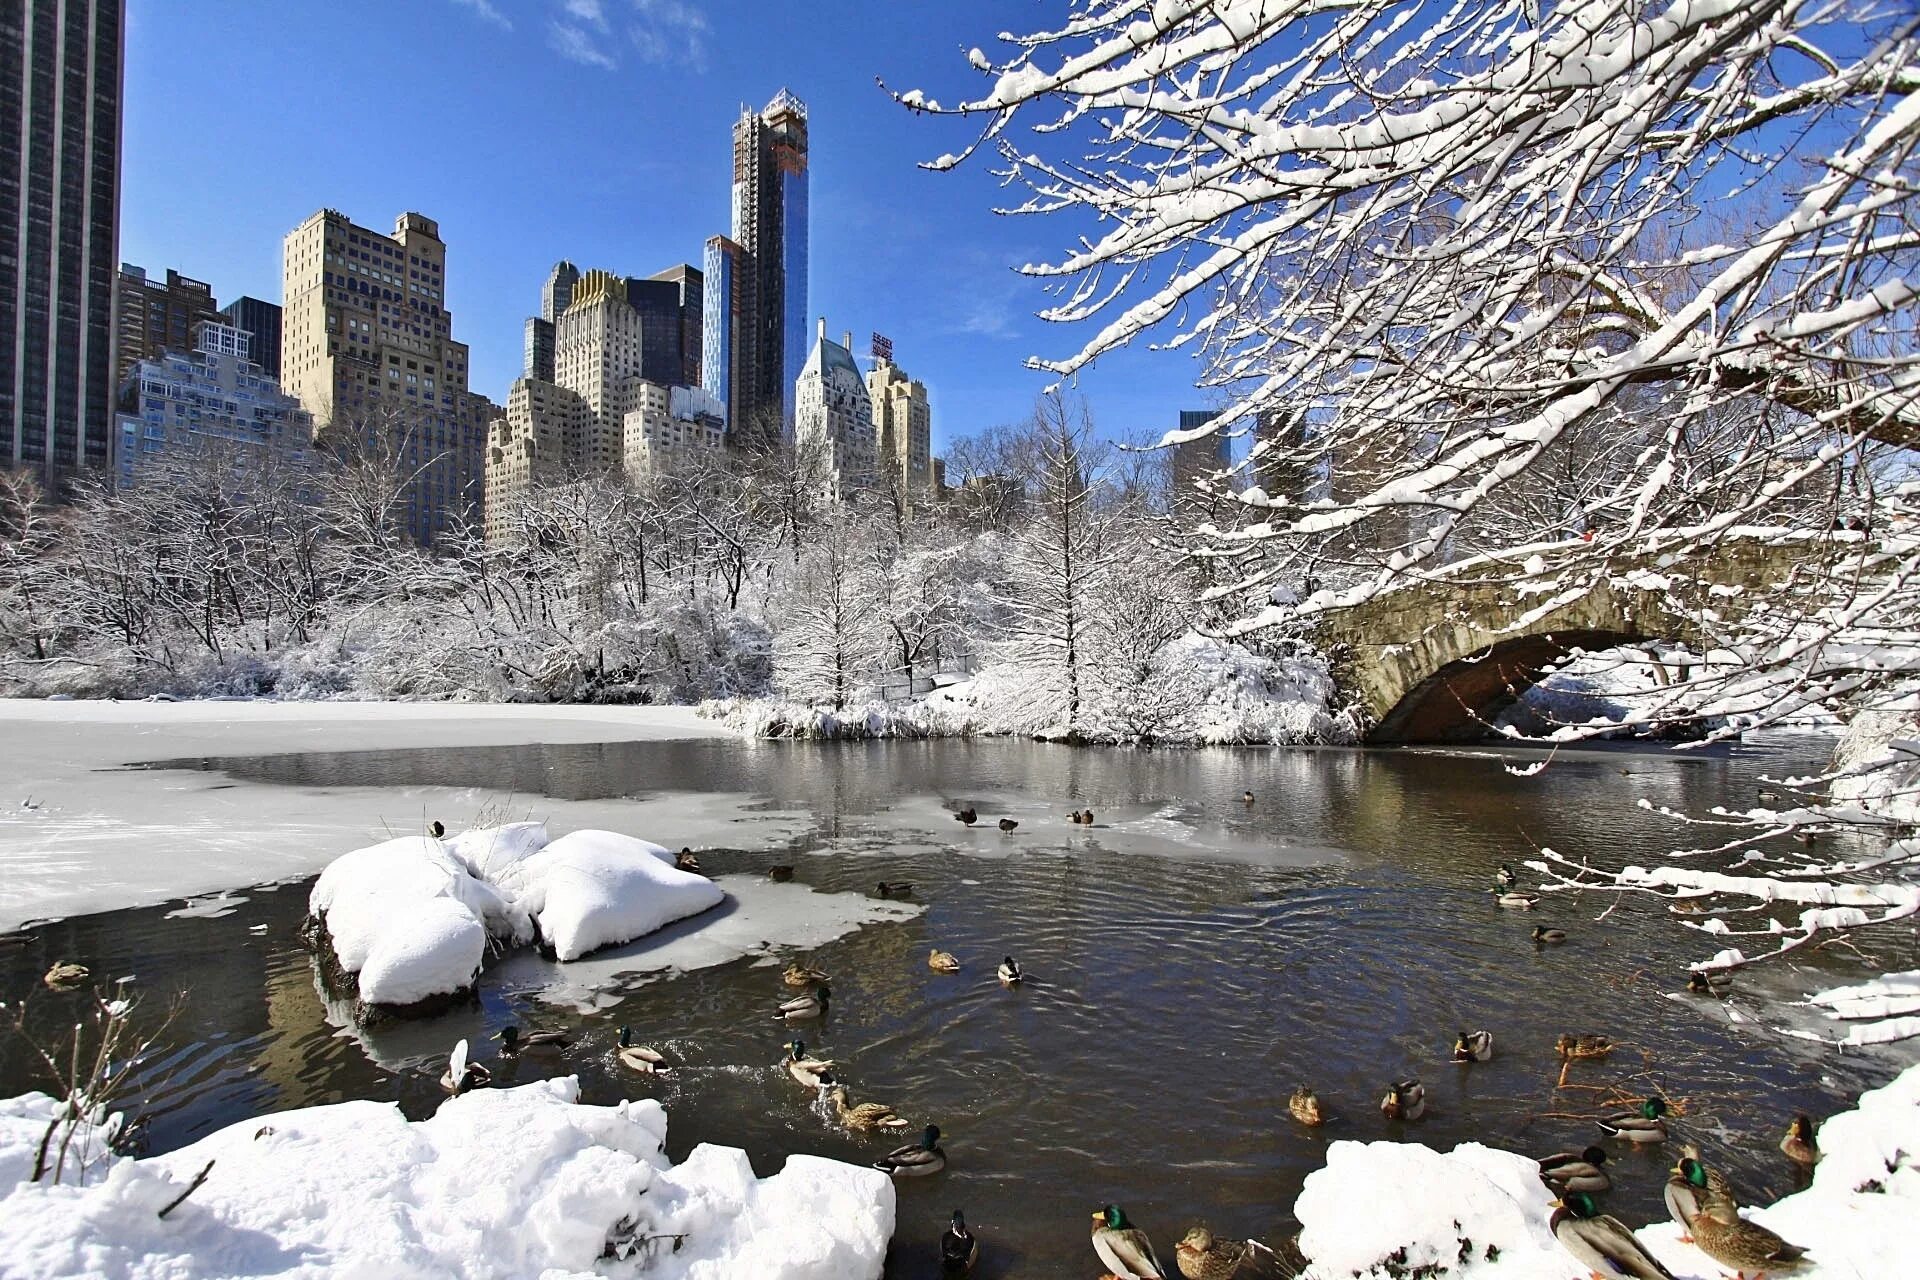 Америка зимнее время. Центральный парк Манхеттен Нью Йорк зима. Зимний централ парк Нью-Йорк. Центральный парк Нью-Йорк зимой. Нью-Йорк Манхэттен зима.